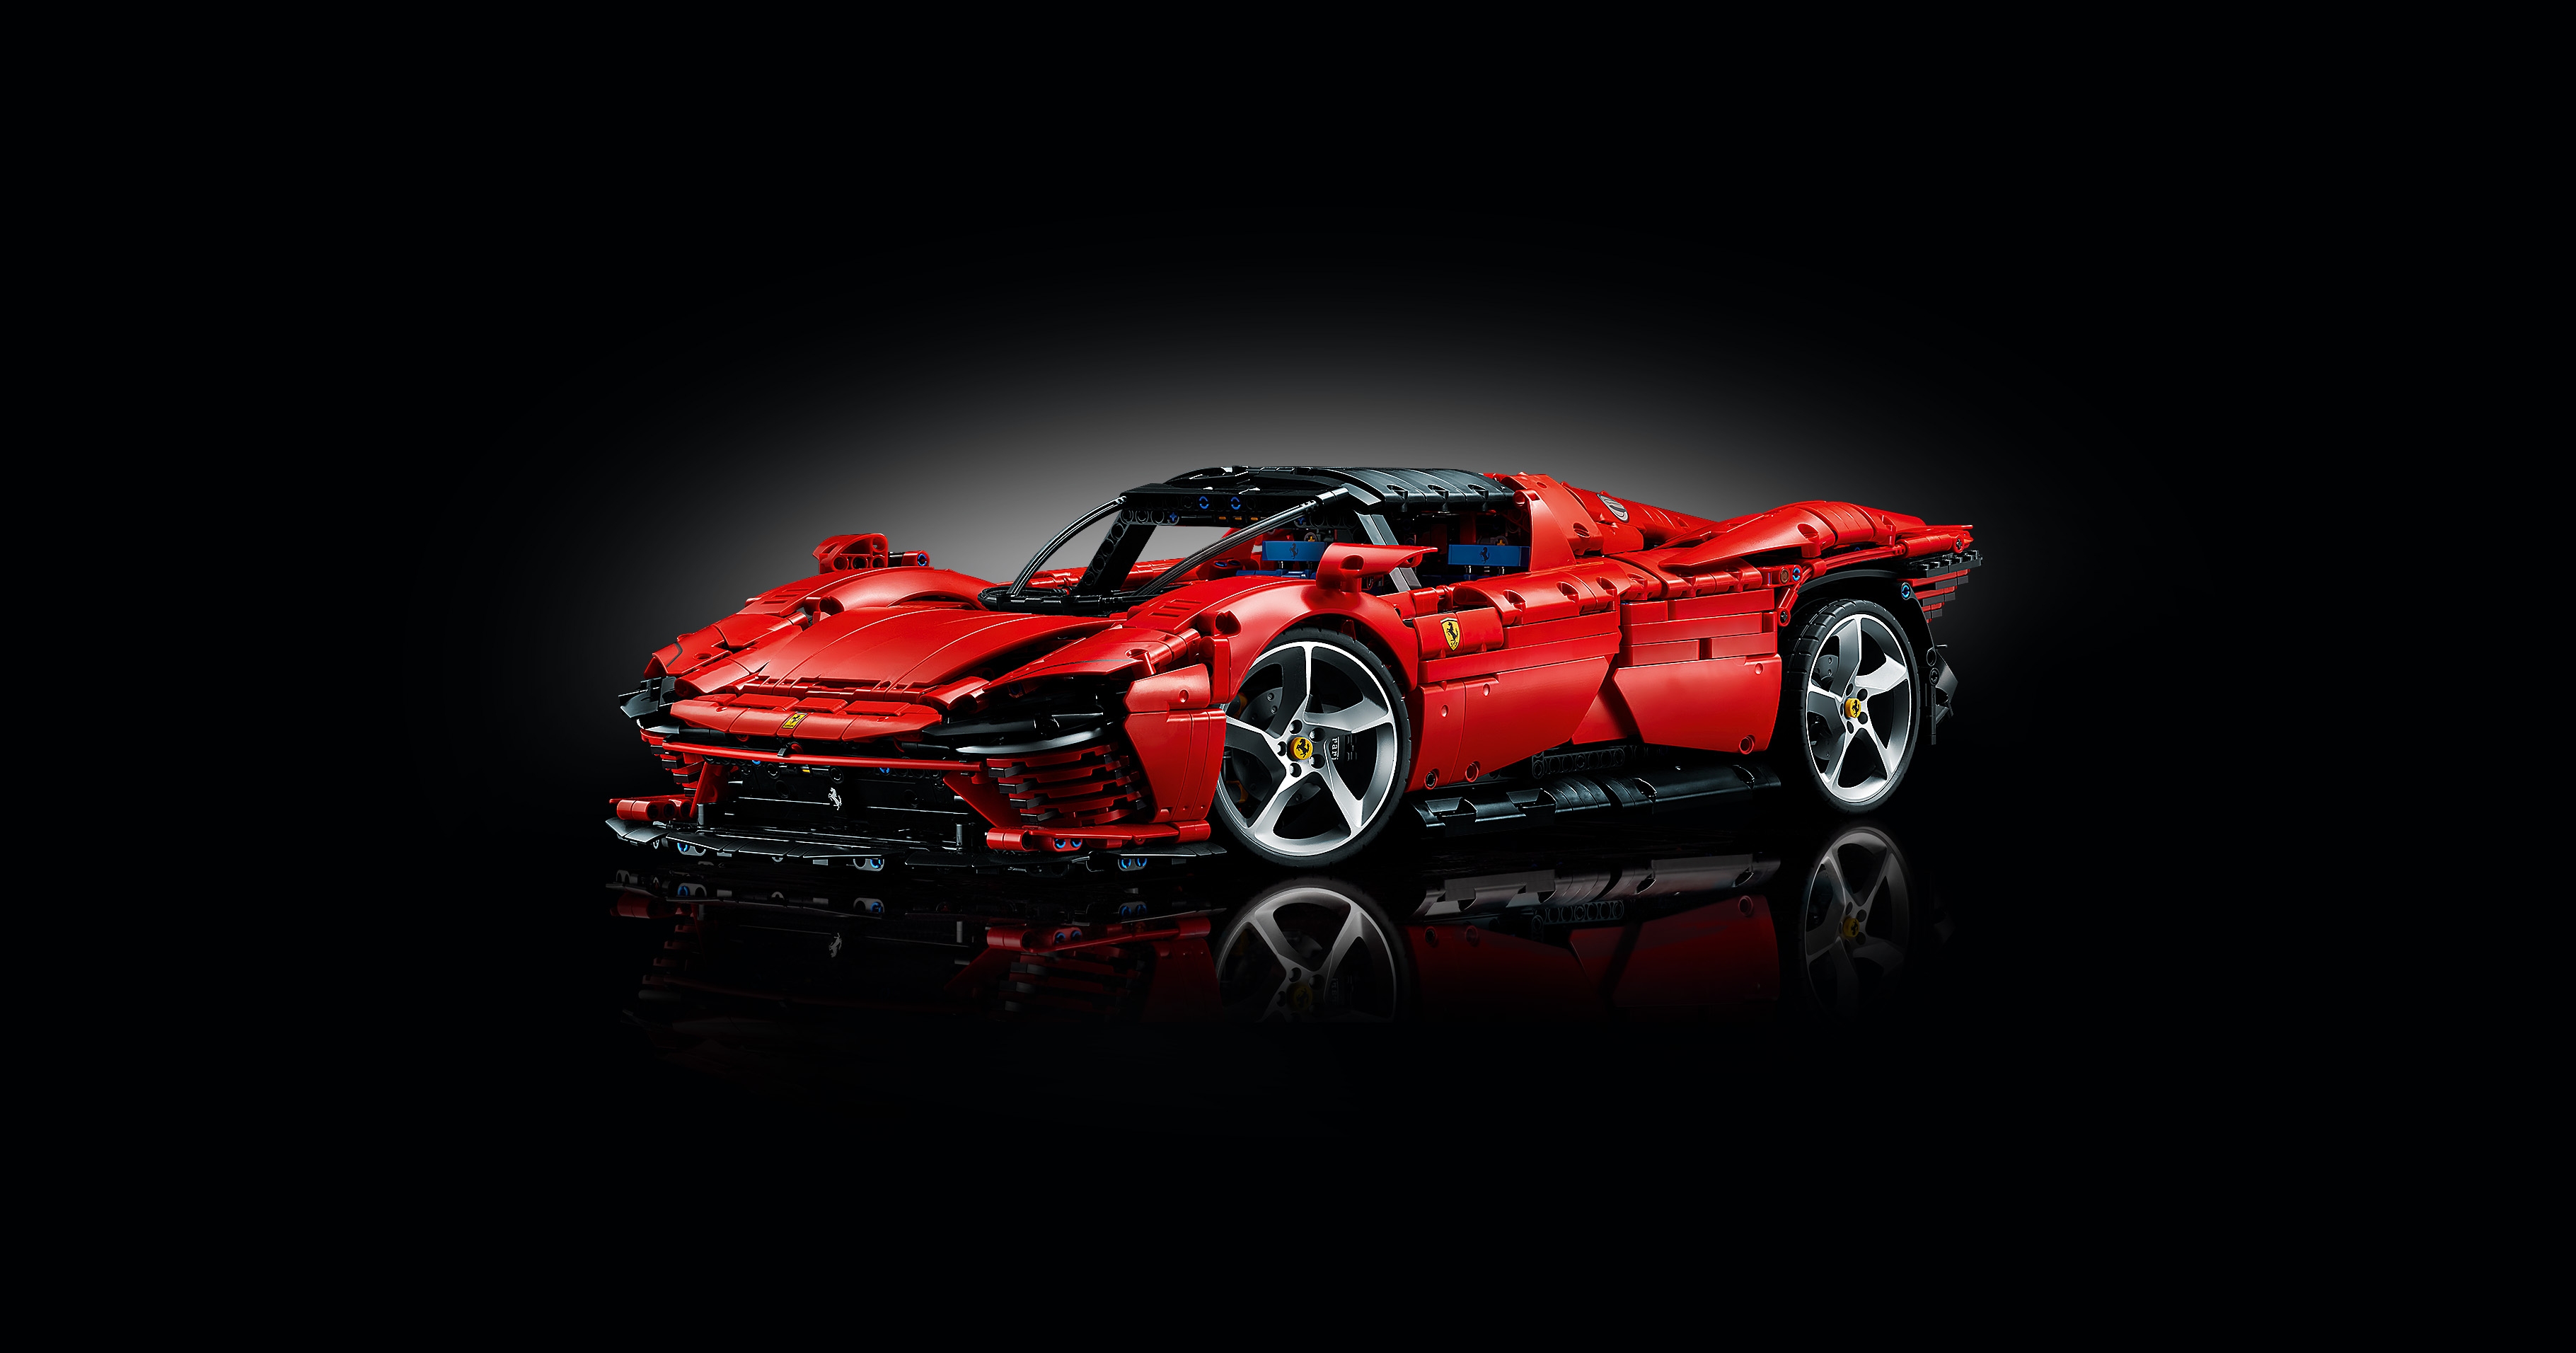 LEGO® Technic 42143 Ferrari Daytona SP3, Voiture Modélisme